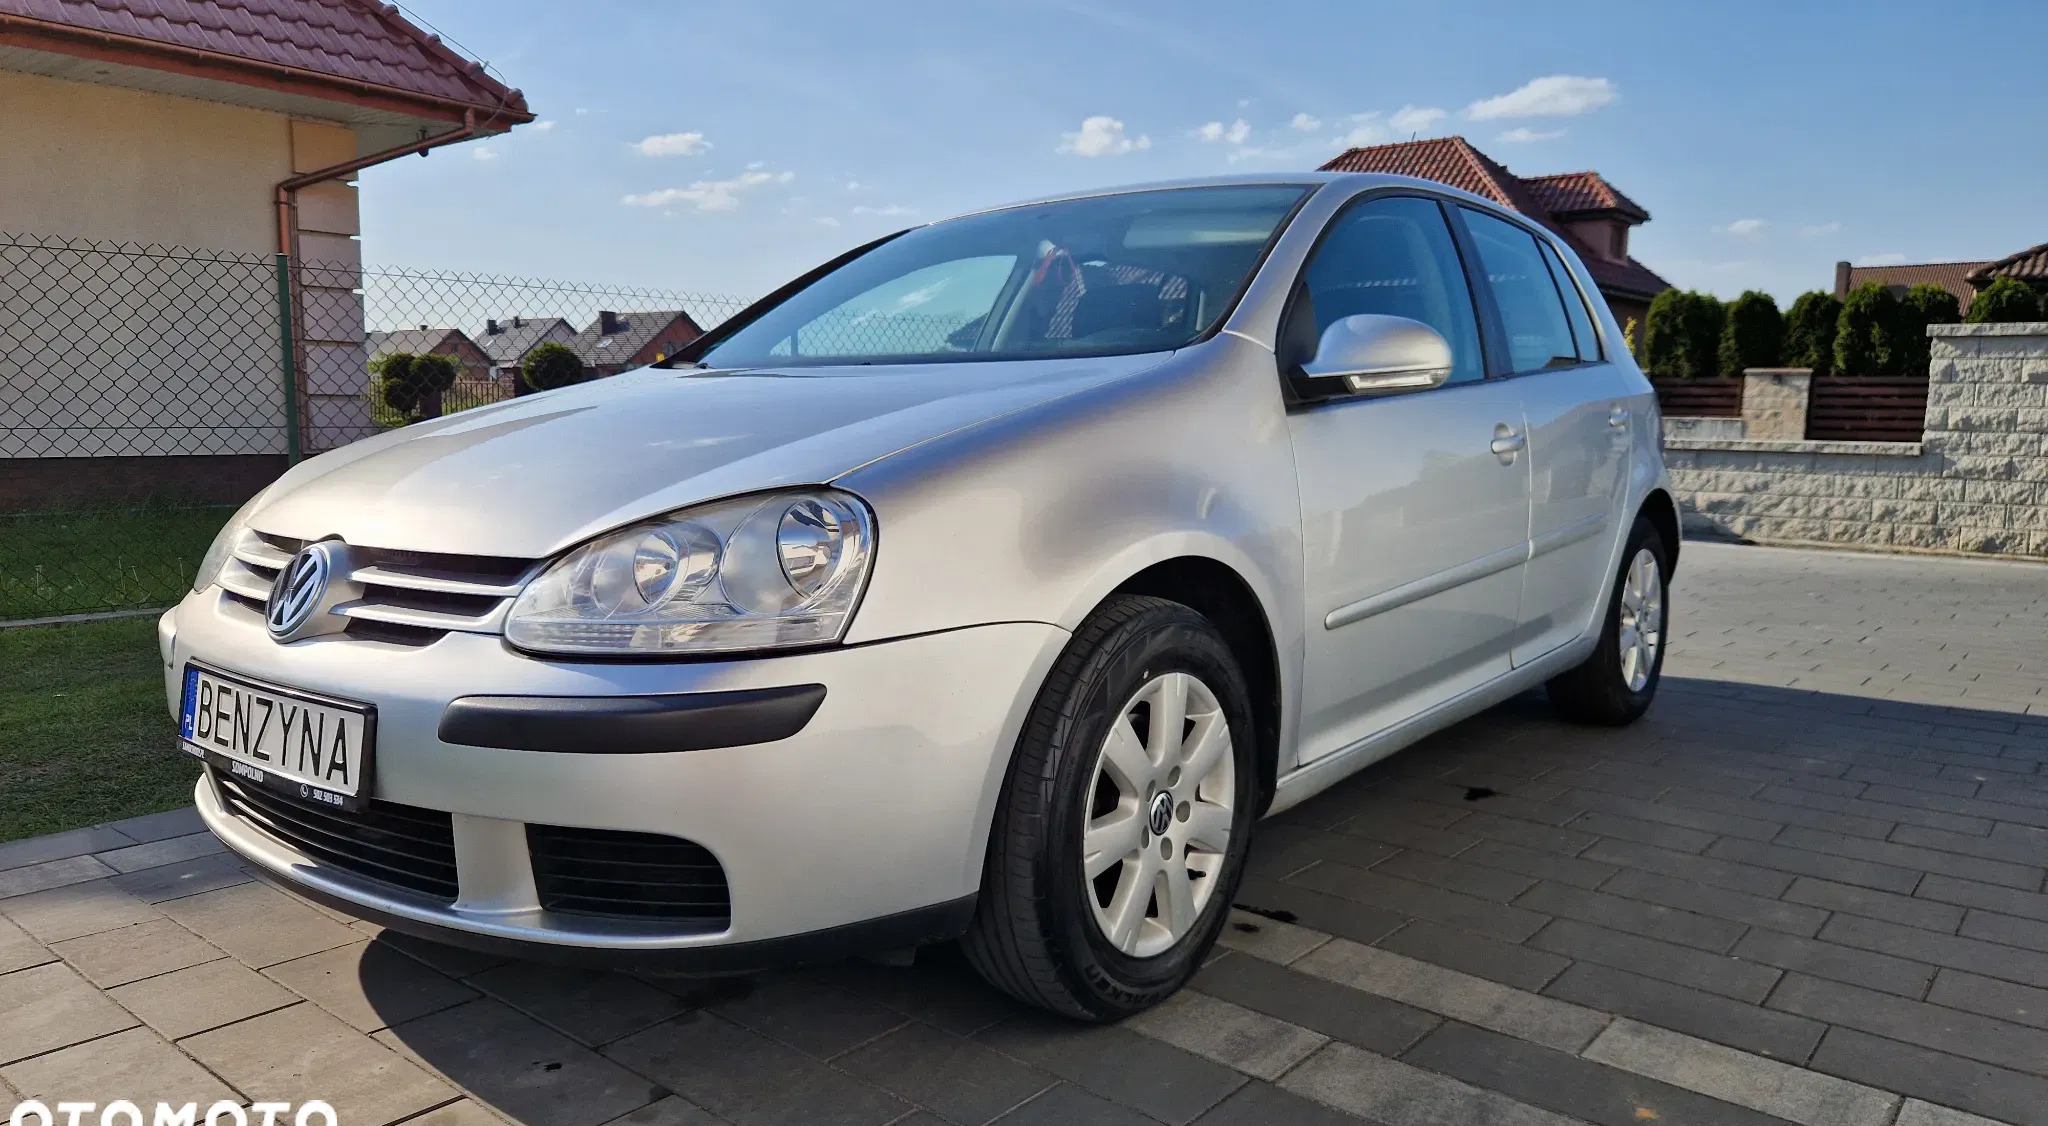 volkswagen Volkswagen Golf cena 13900 przebieg: 280000, rok produkcji 2005 z Sompolno